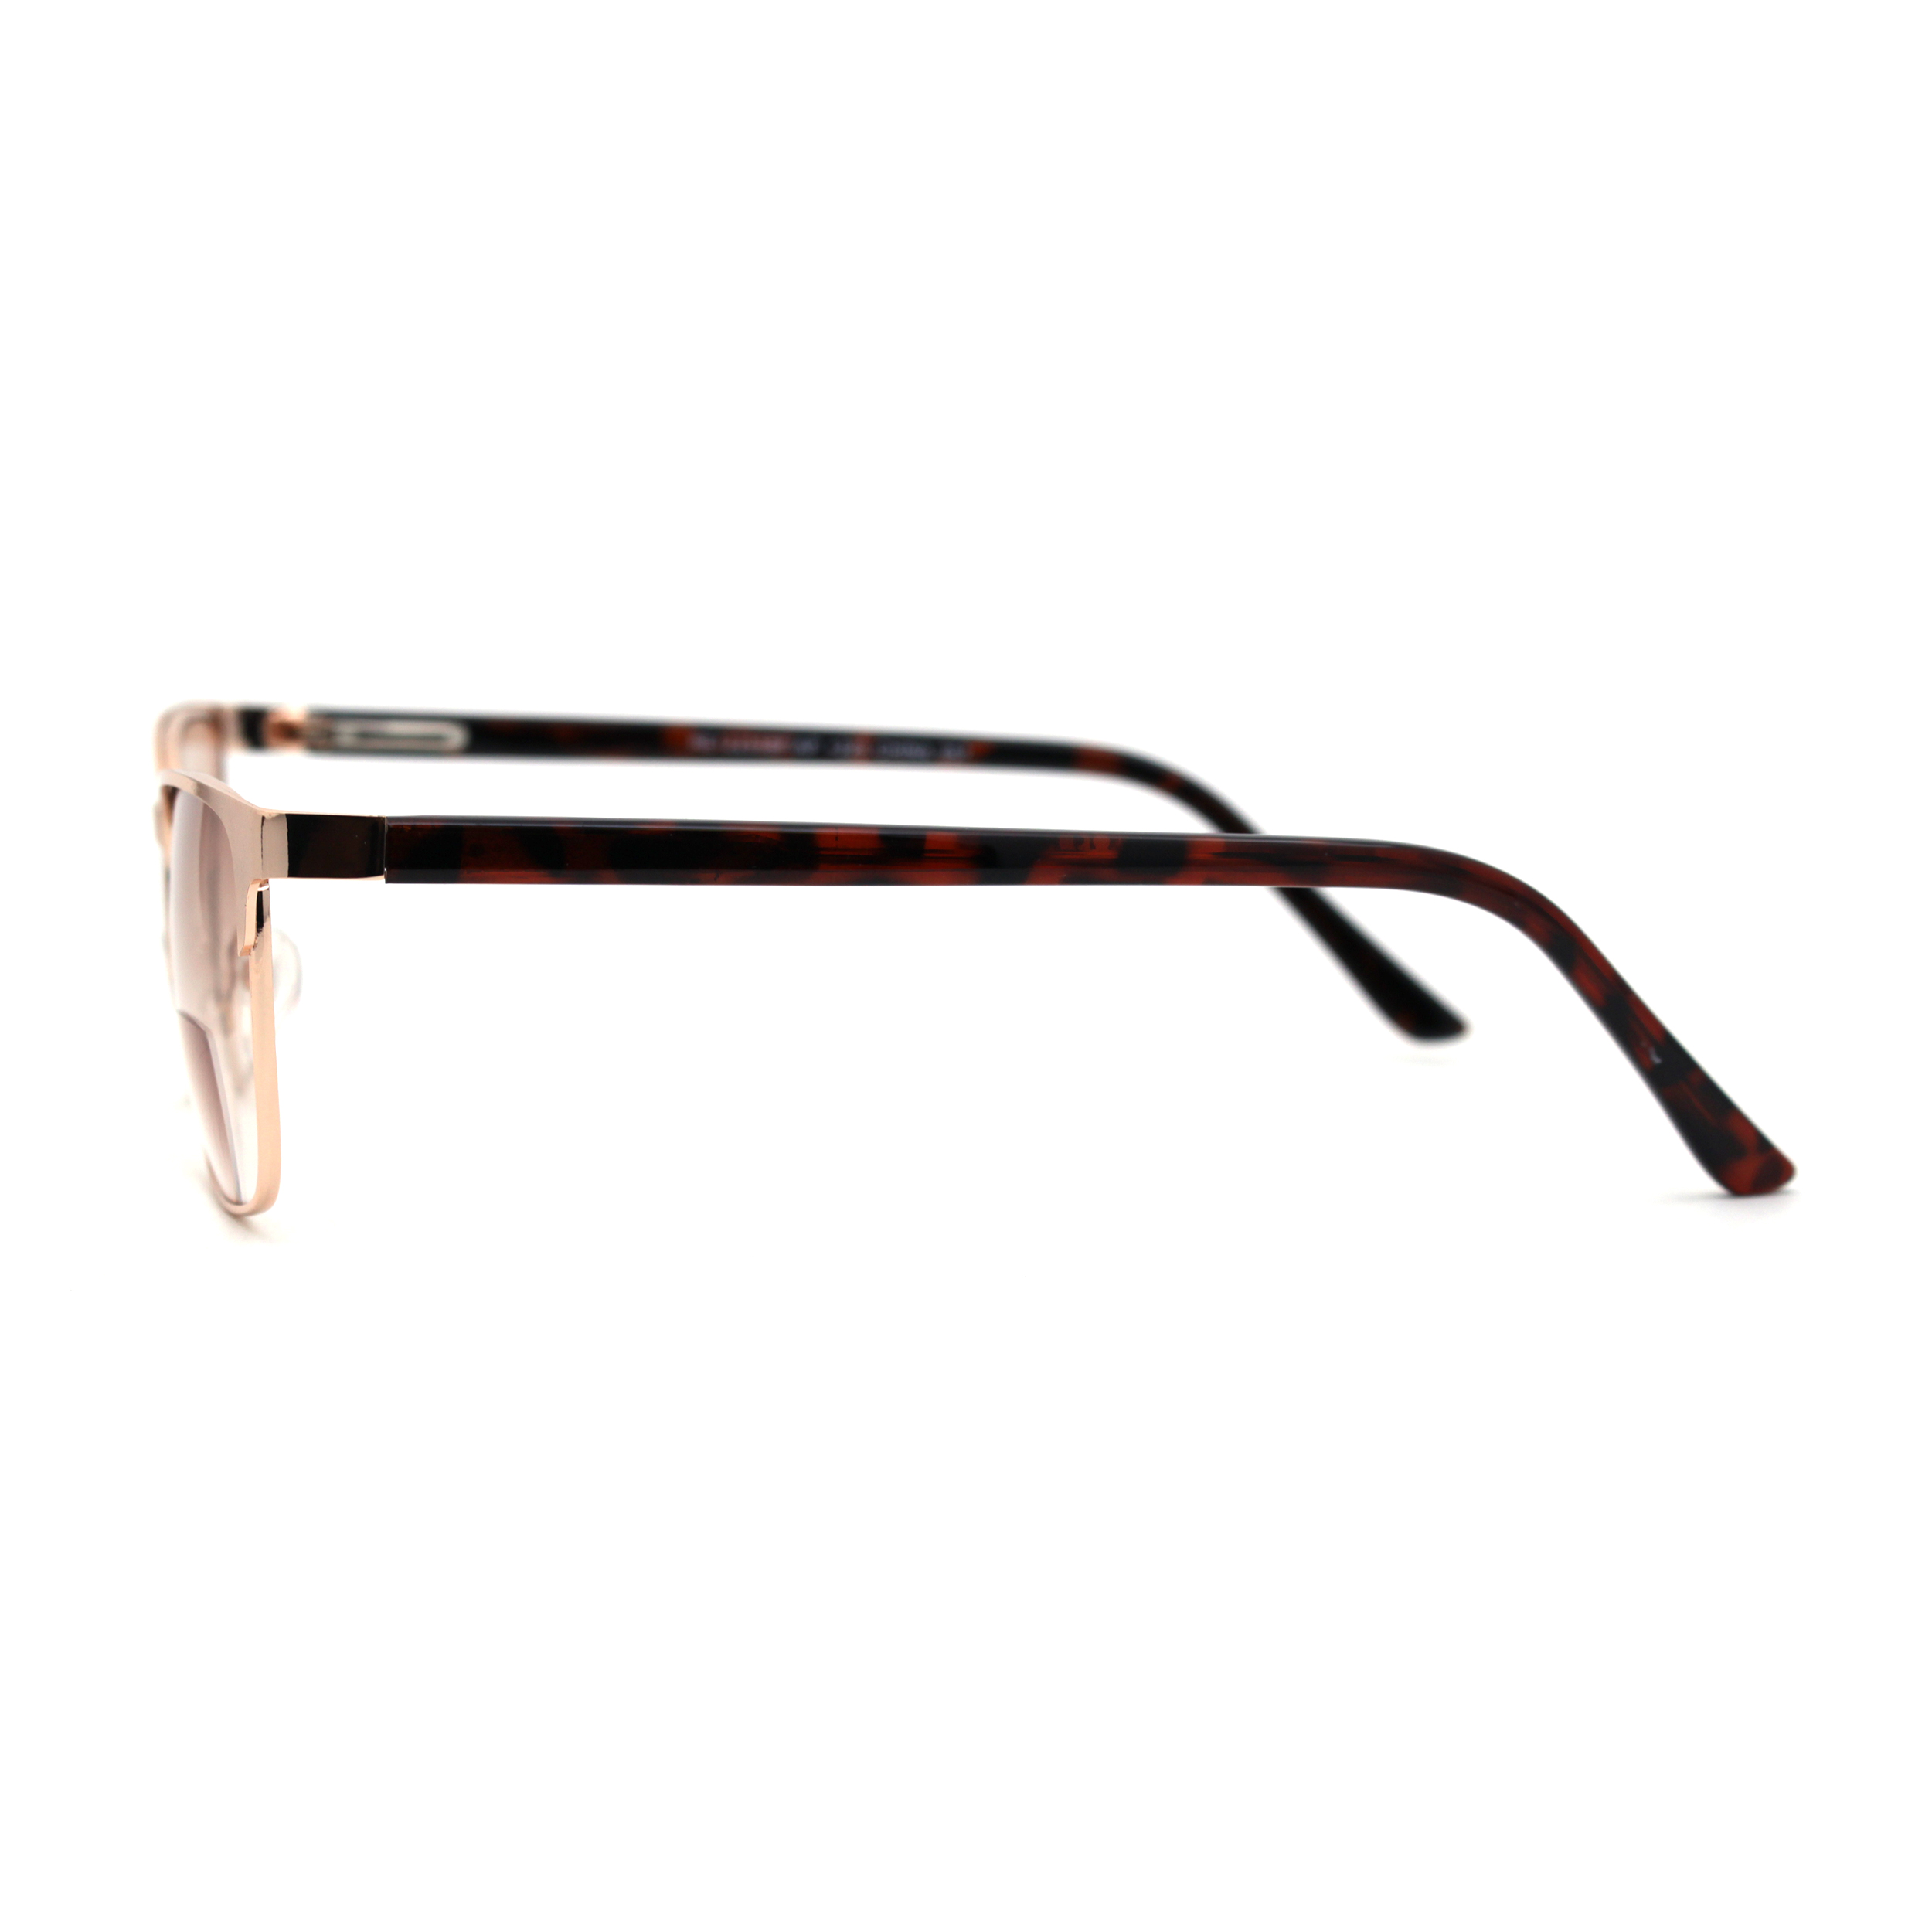 Mens Metal Half Rim Rectangular Bifocal Light Sunglasses Reader Gold +2.0 - image 3 of 4